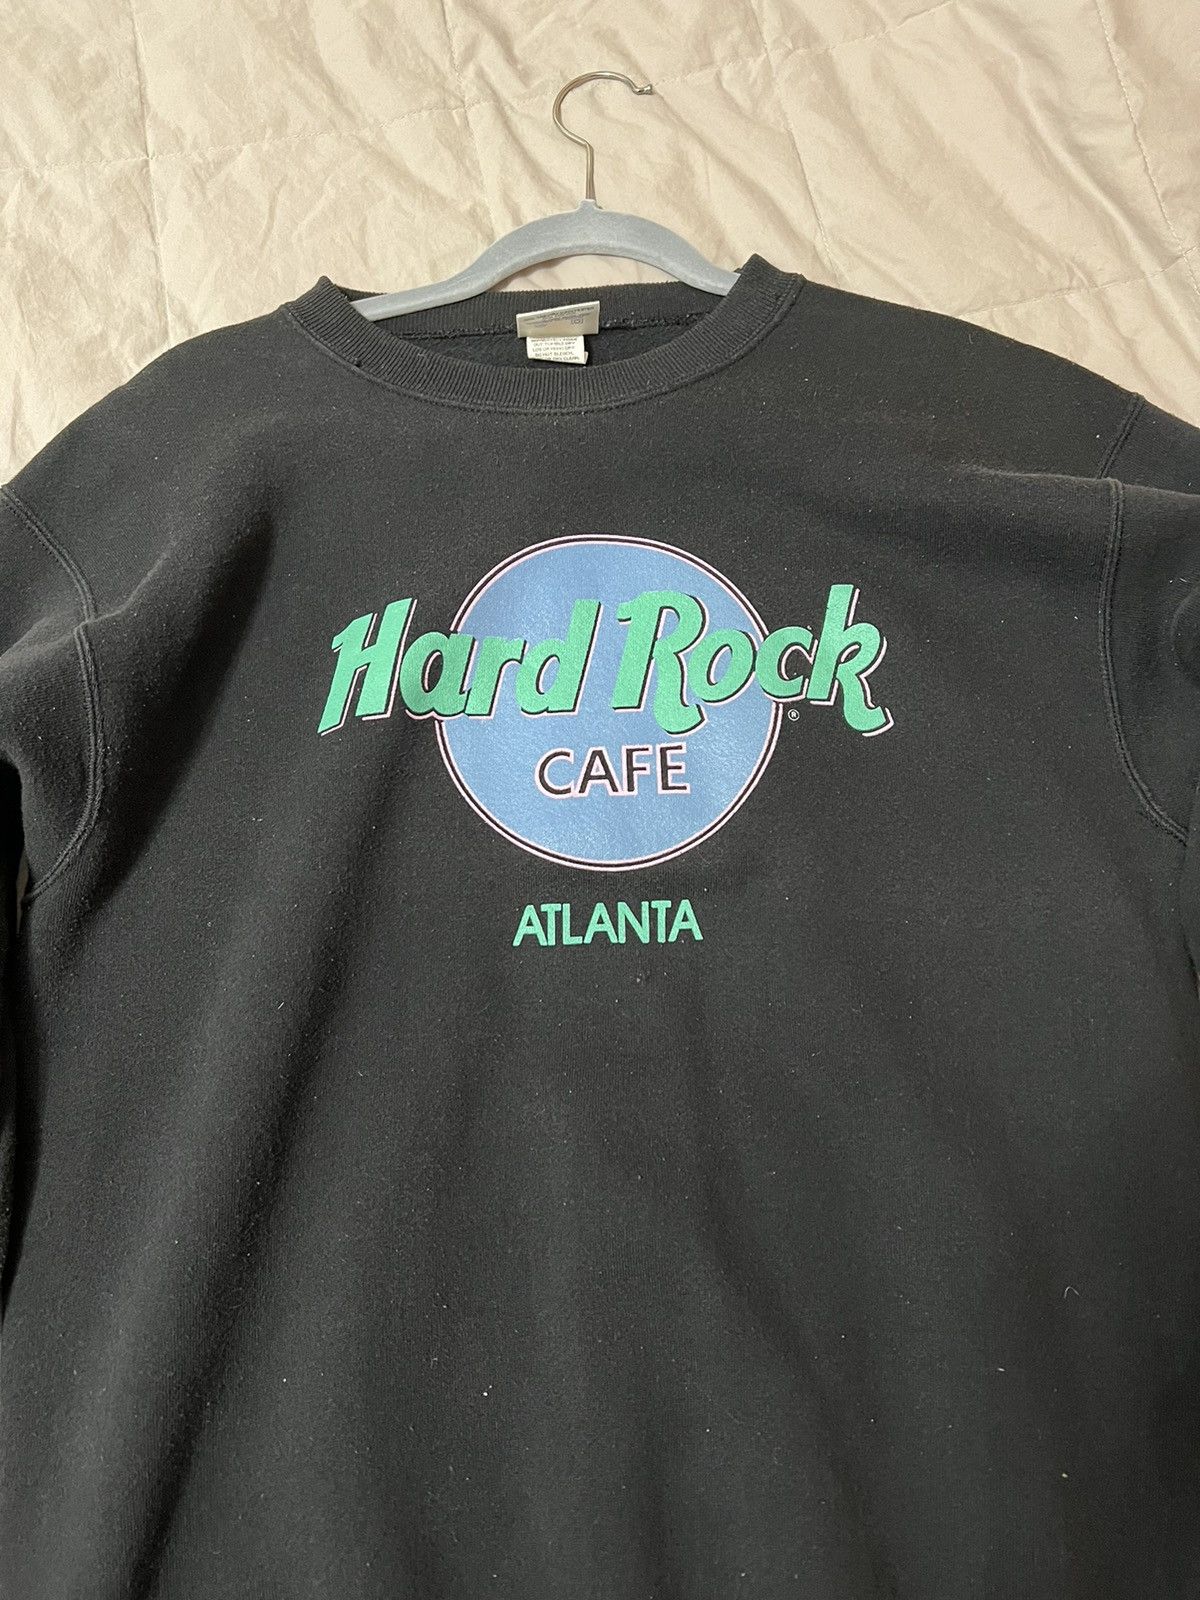 Vintage Hard Rock Cafe Atlanta Sweatshirt Size US S / EU 44-46 / 1 - 1 Preview